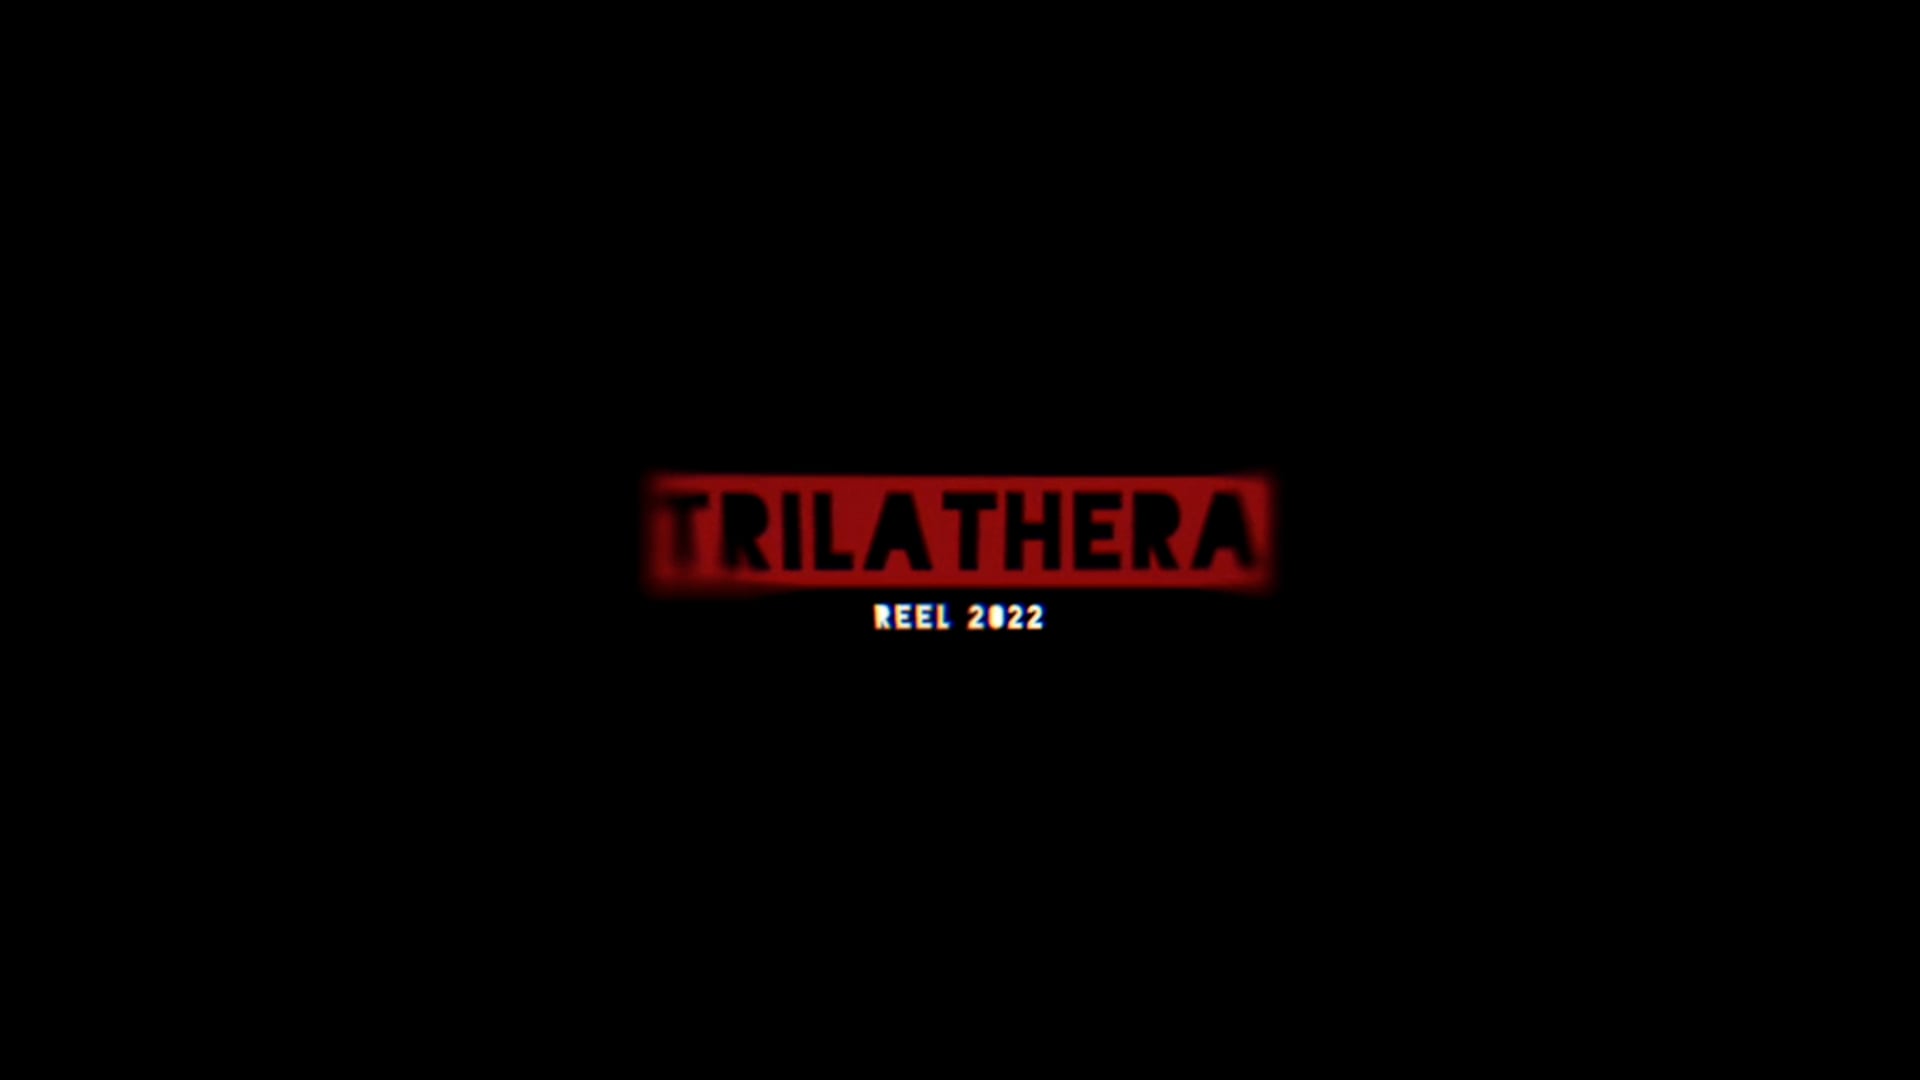 TRILATHERA Reel2022